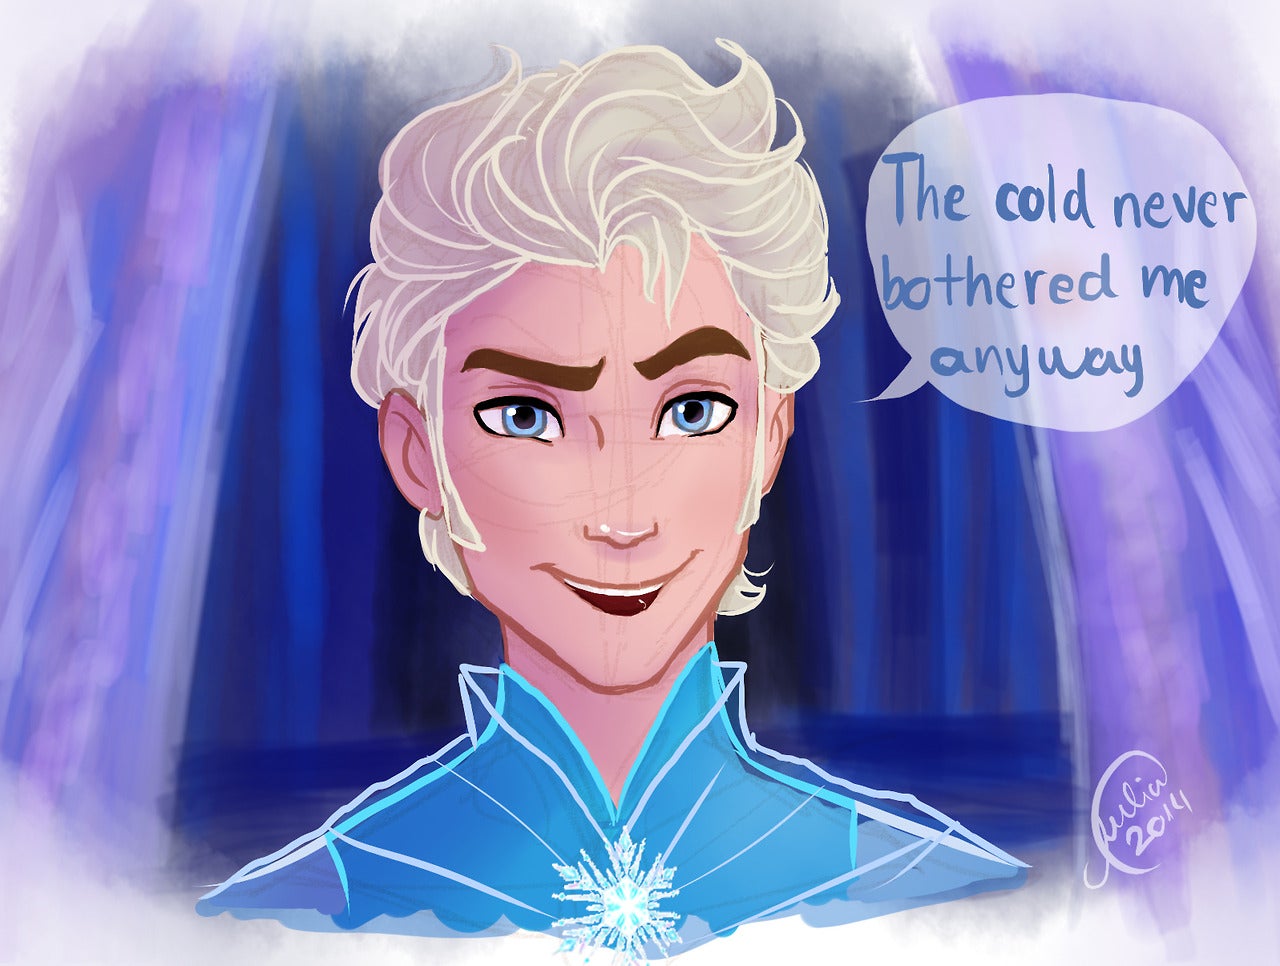 Adorable Genderbent Frozen Fanart Turns Elsa Into A Snow King